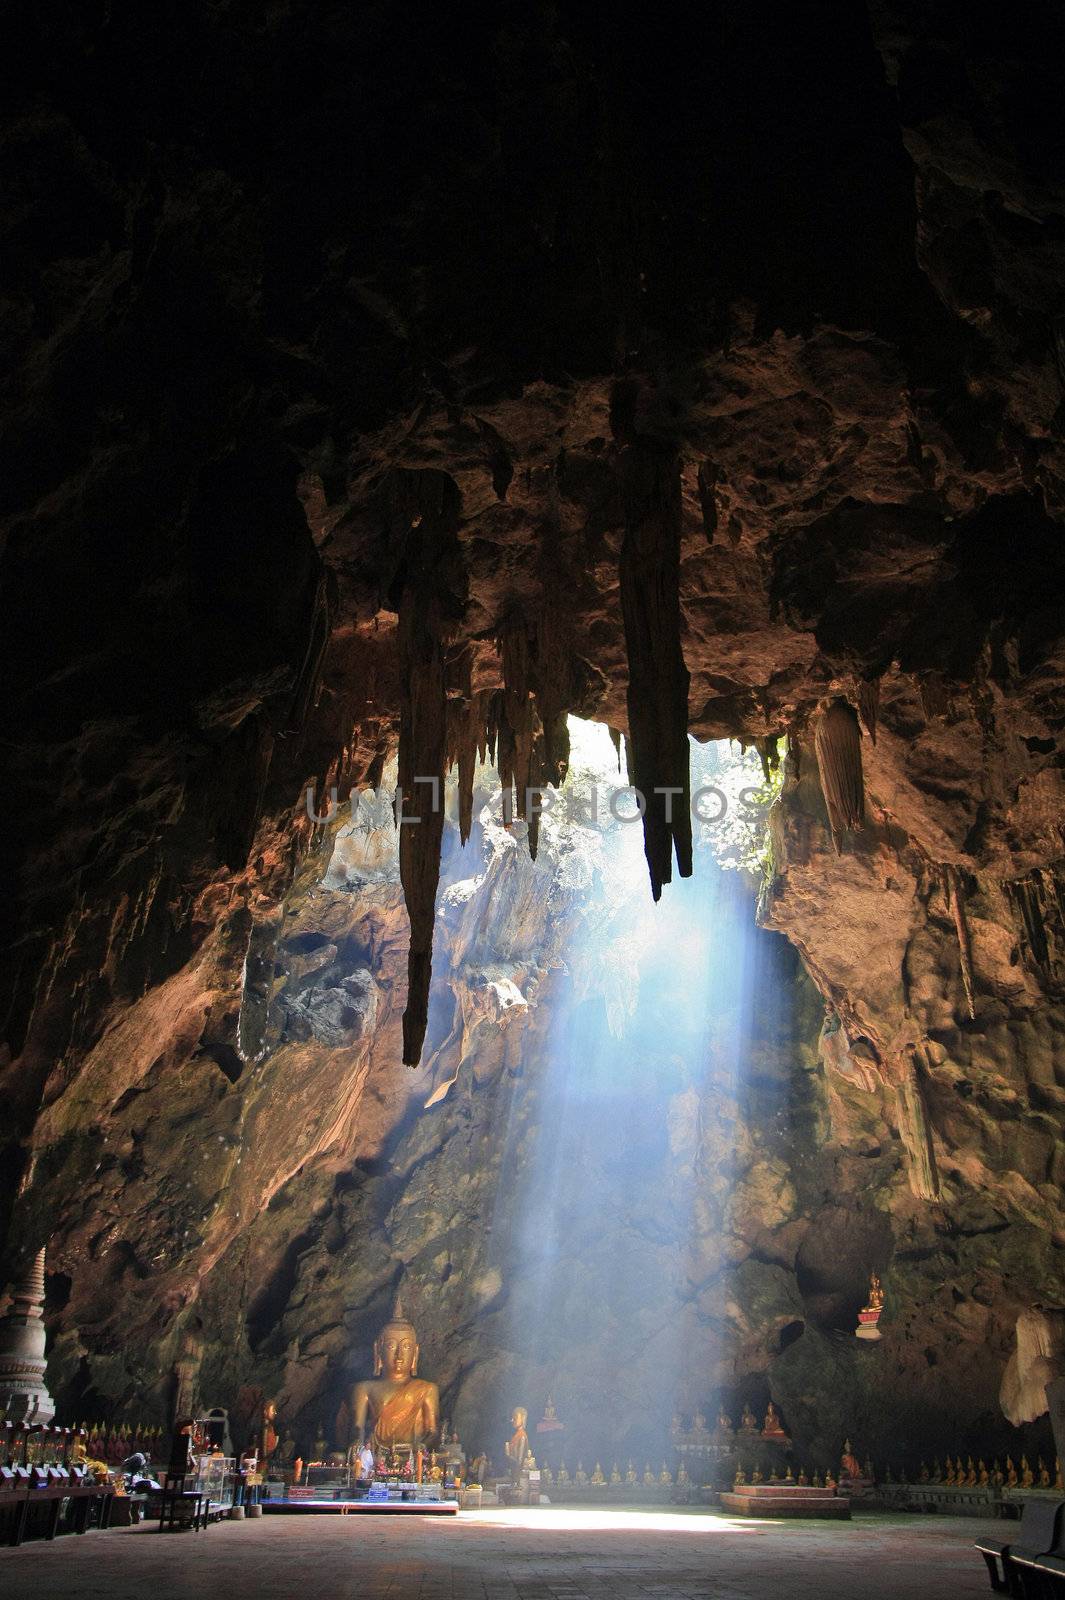 phaya grotto in petchburi, thailand